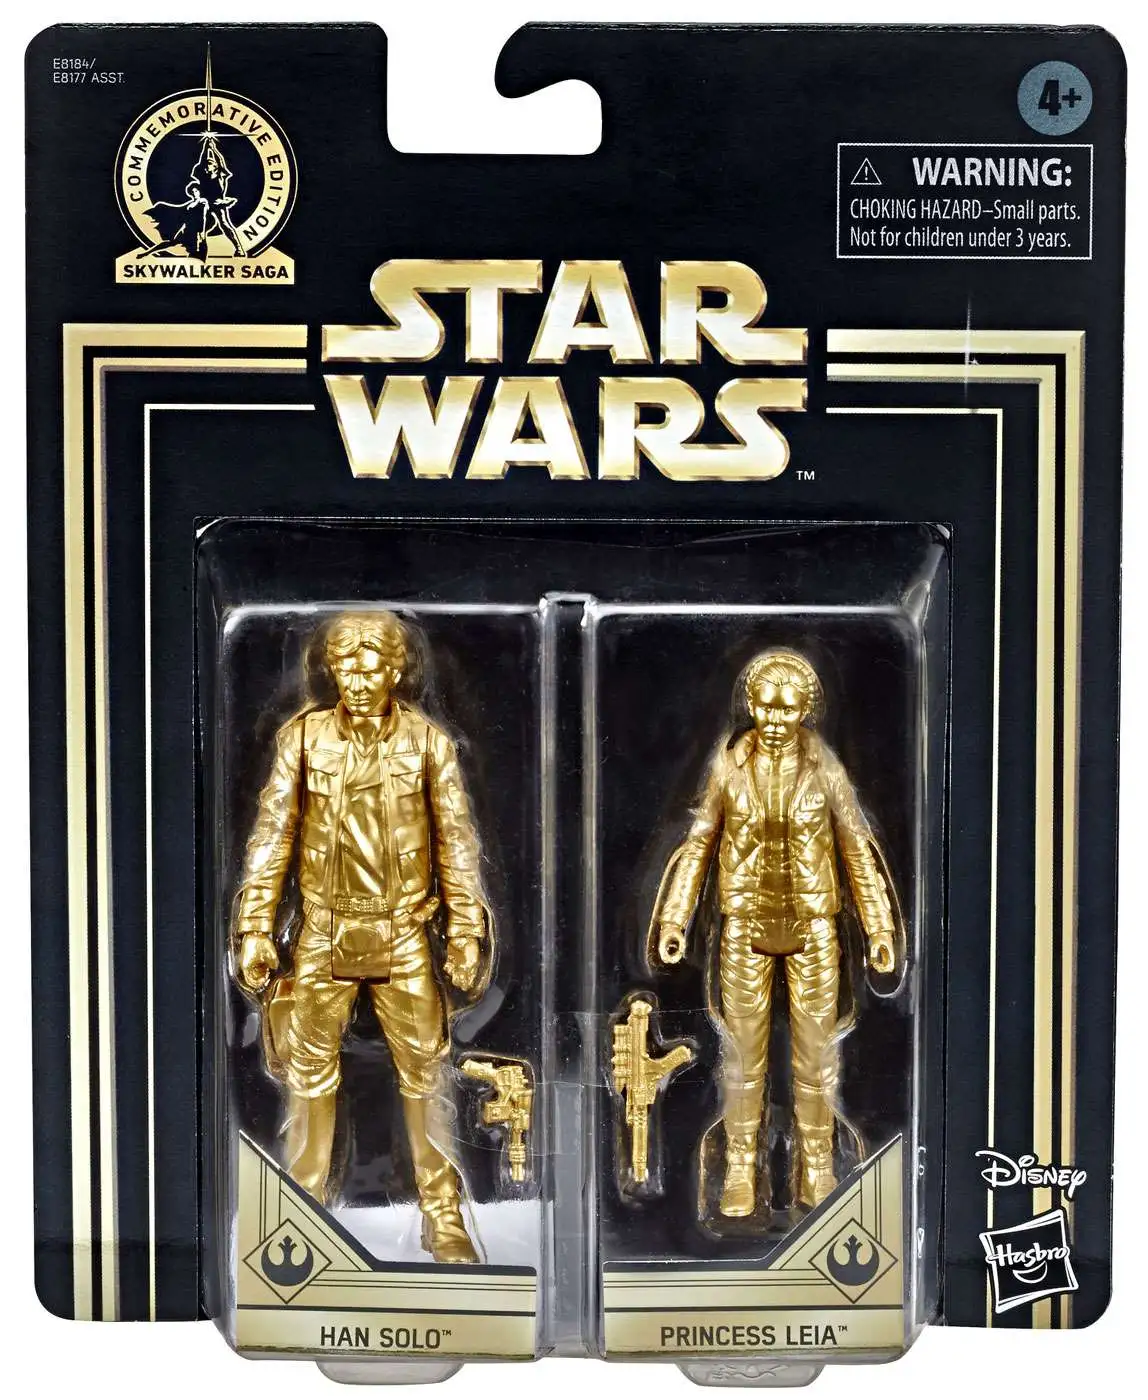 2019 Star Wars Skywalker Saga Gold Commemorative Edition Mace Windu & Jango Fett for sale online 